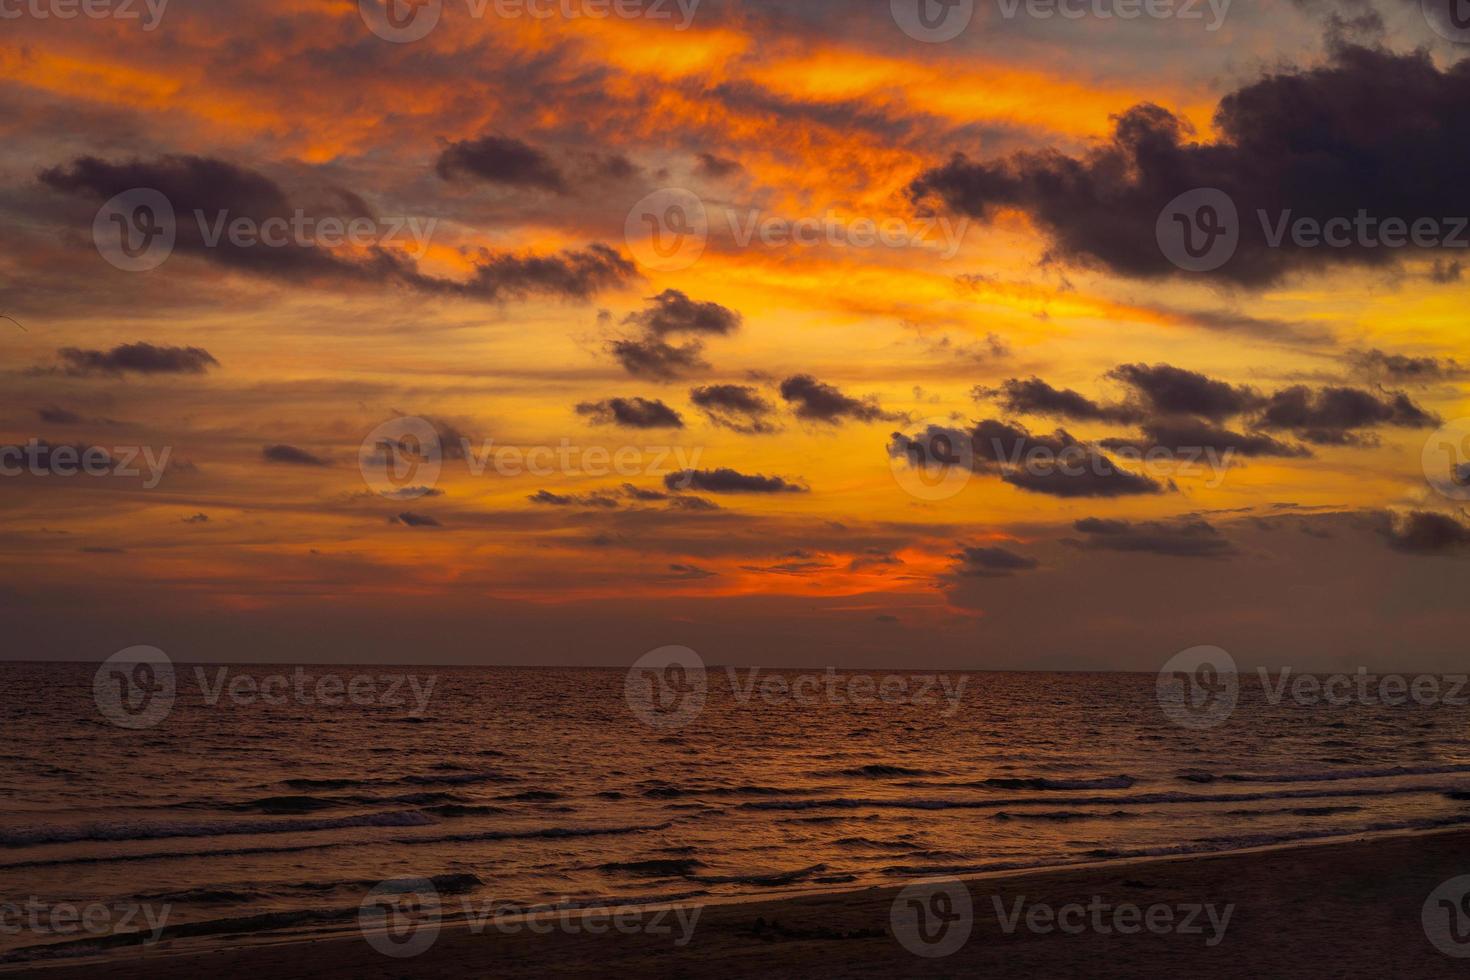 clássico lindo crepúsculo romântico e incrível momento do pôr do sol na praia de chantaburi - leste da tailândia. foto